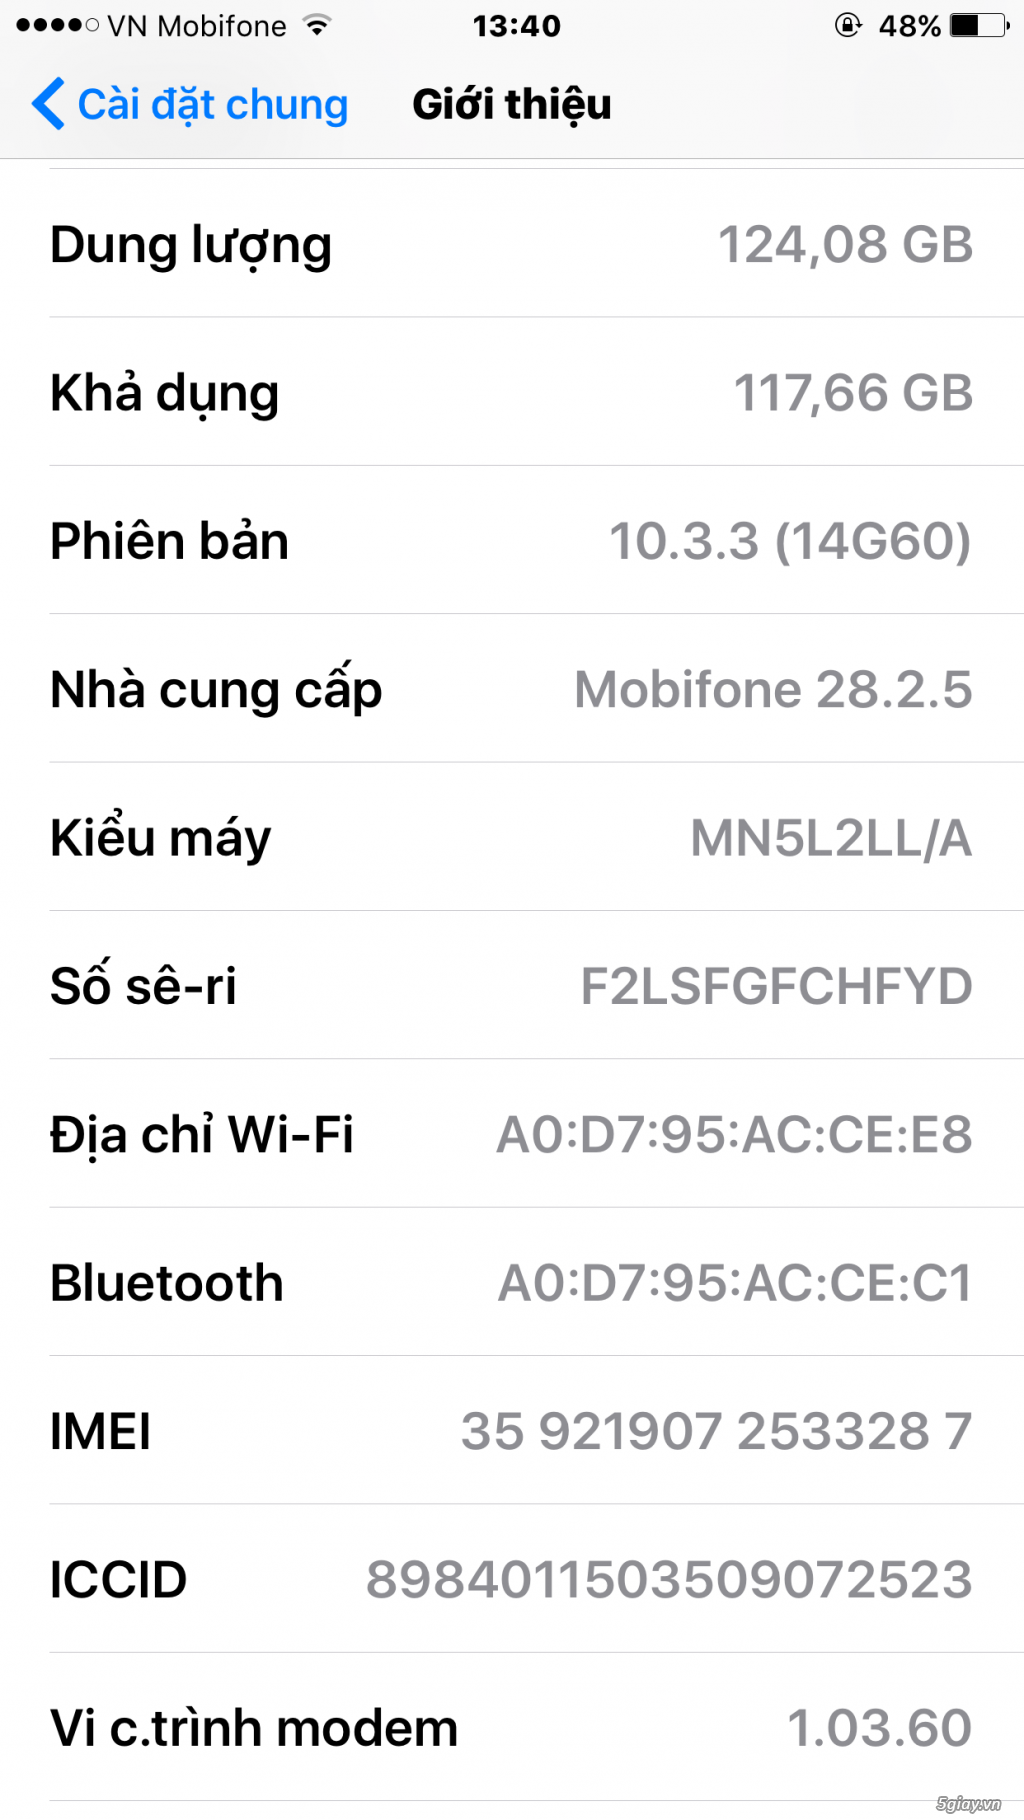 Iphone 7 plus jetblack 128G model A1784 mã LL - 1